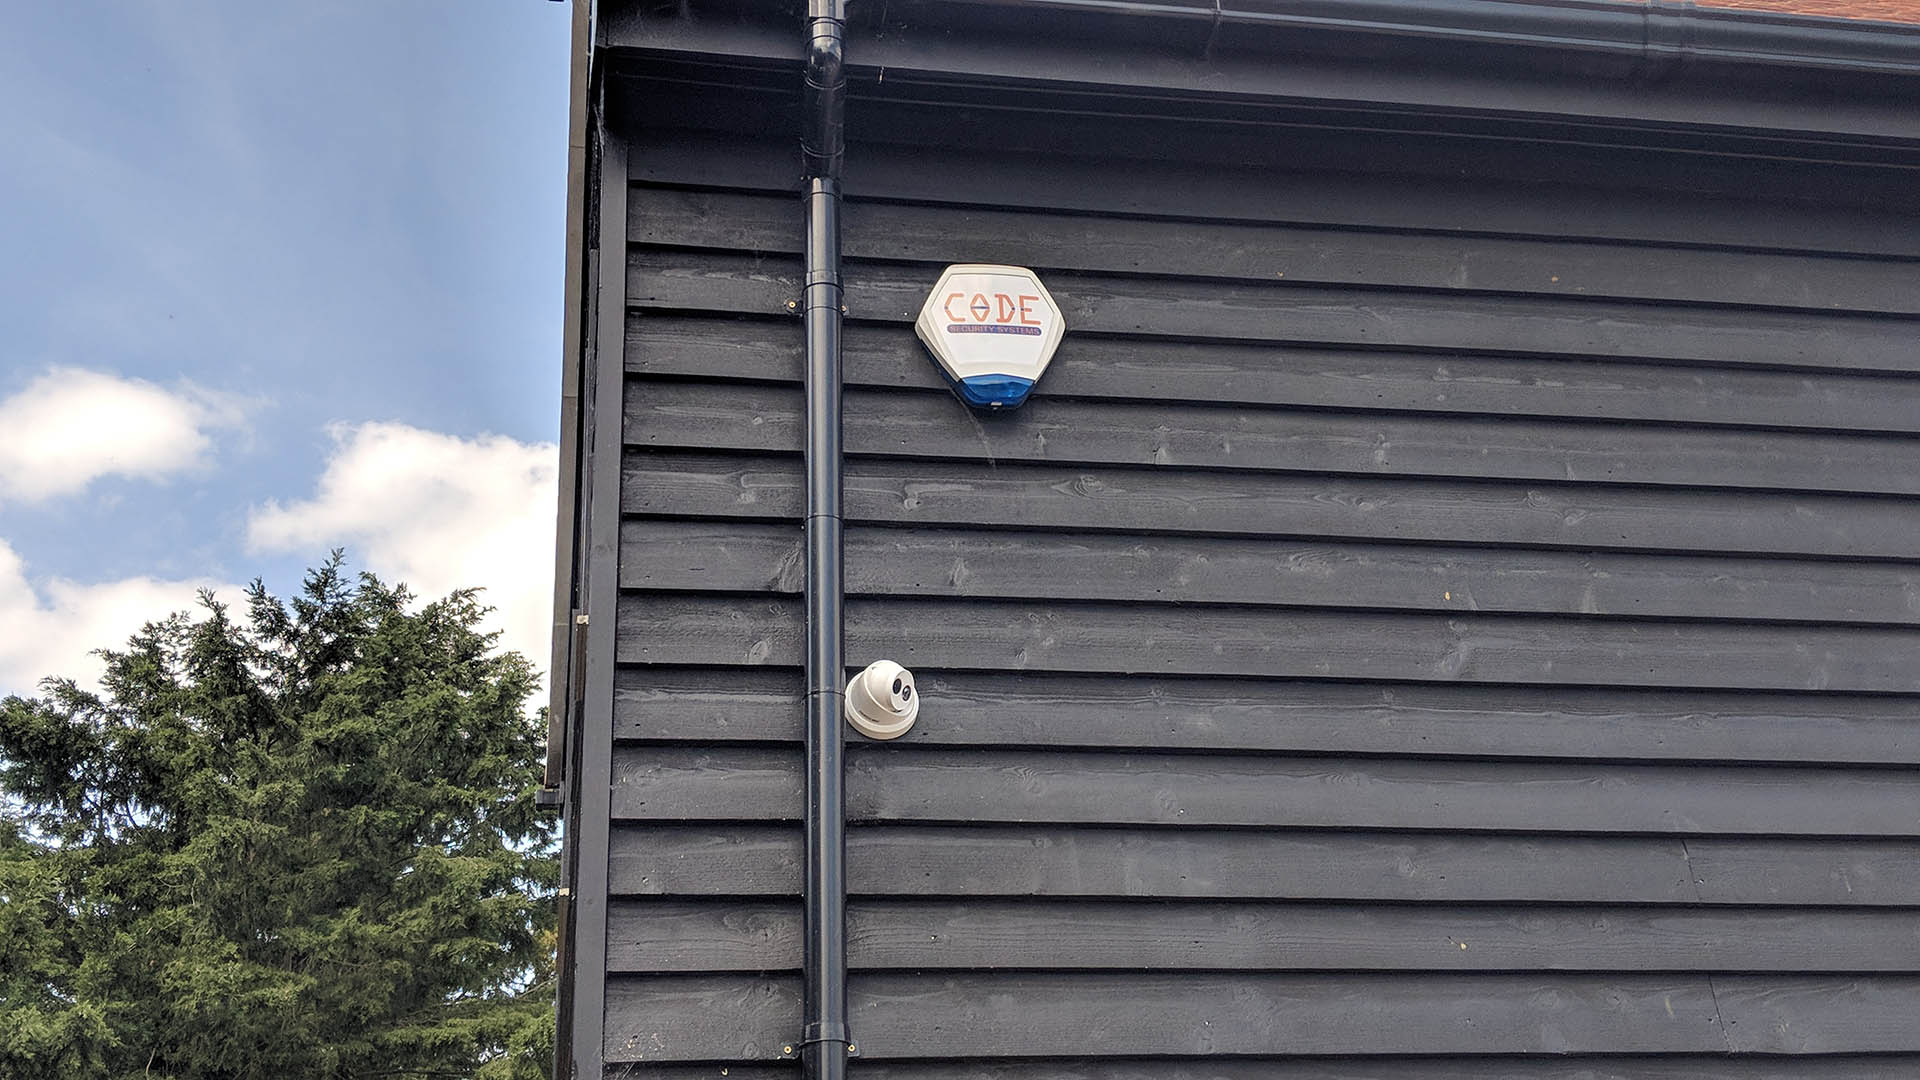 4K CCTV Installation in Maldon, Essex